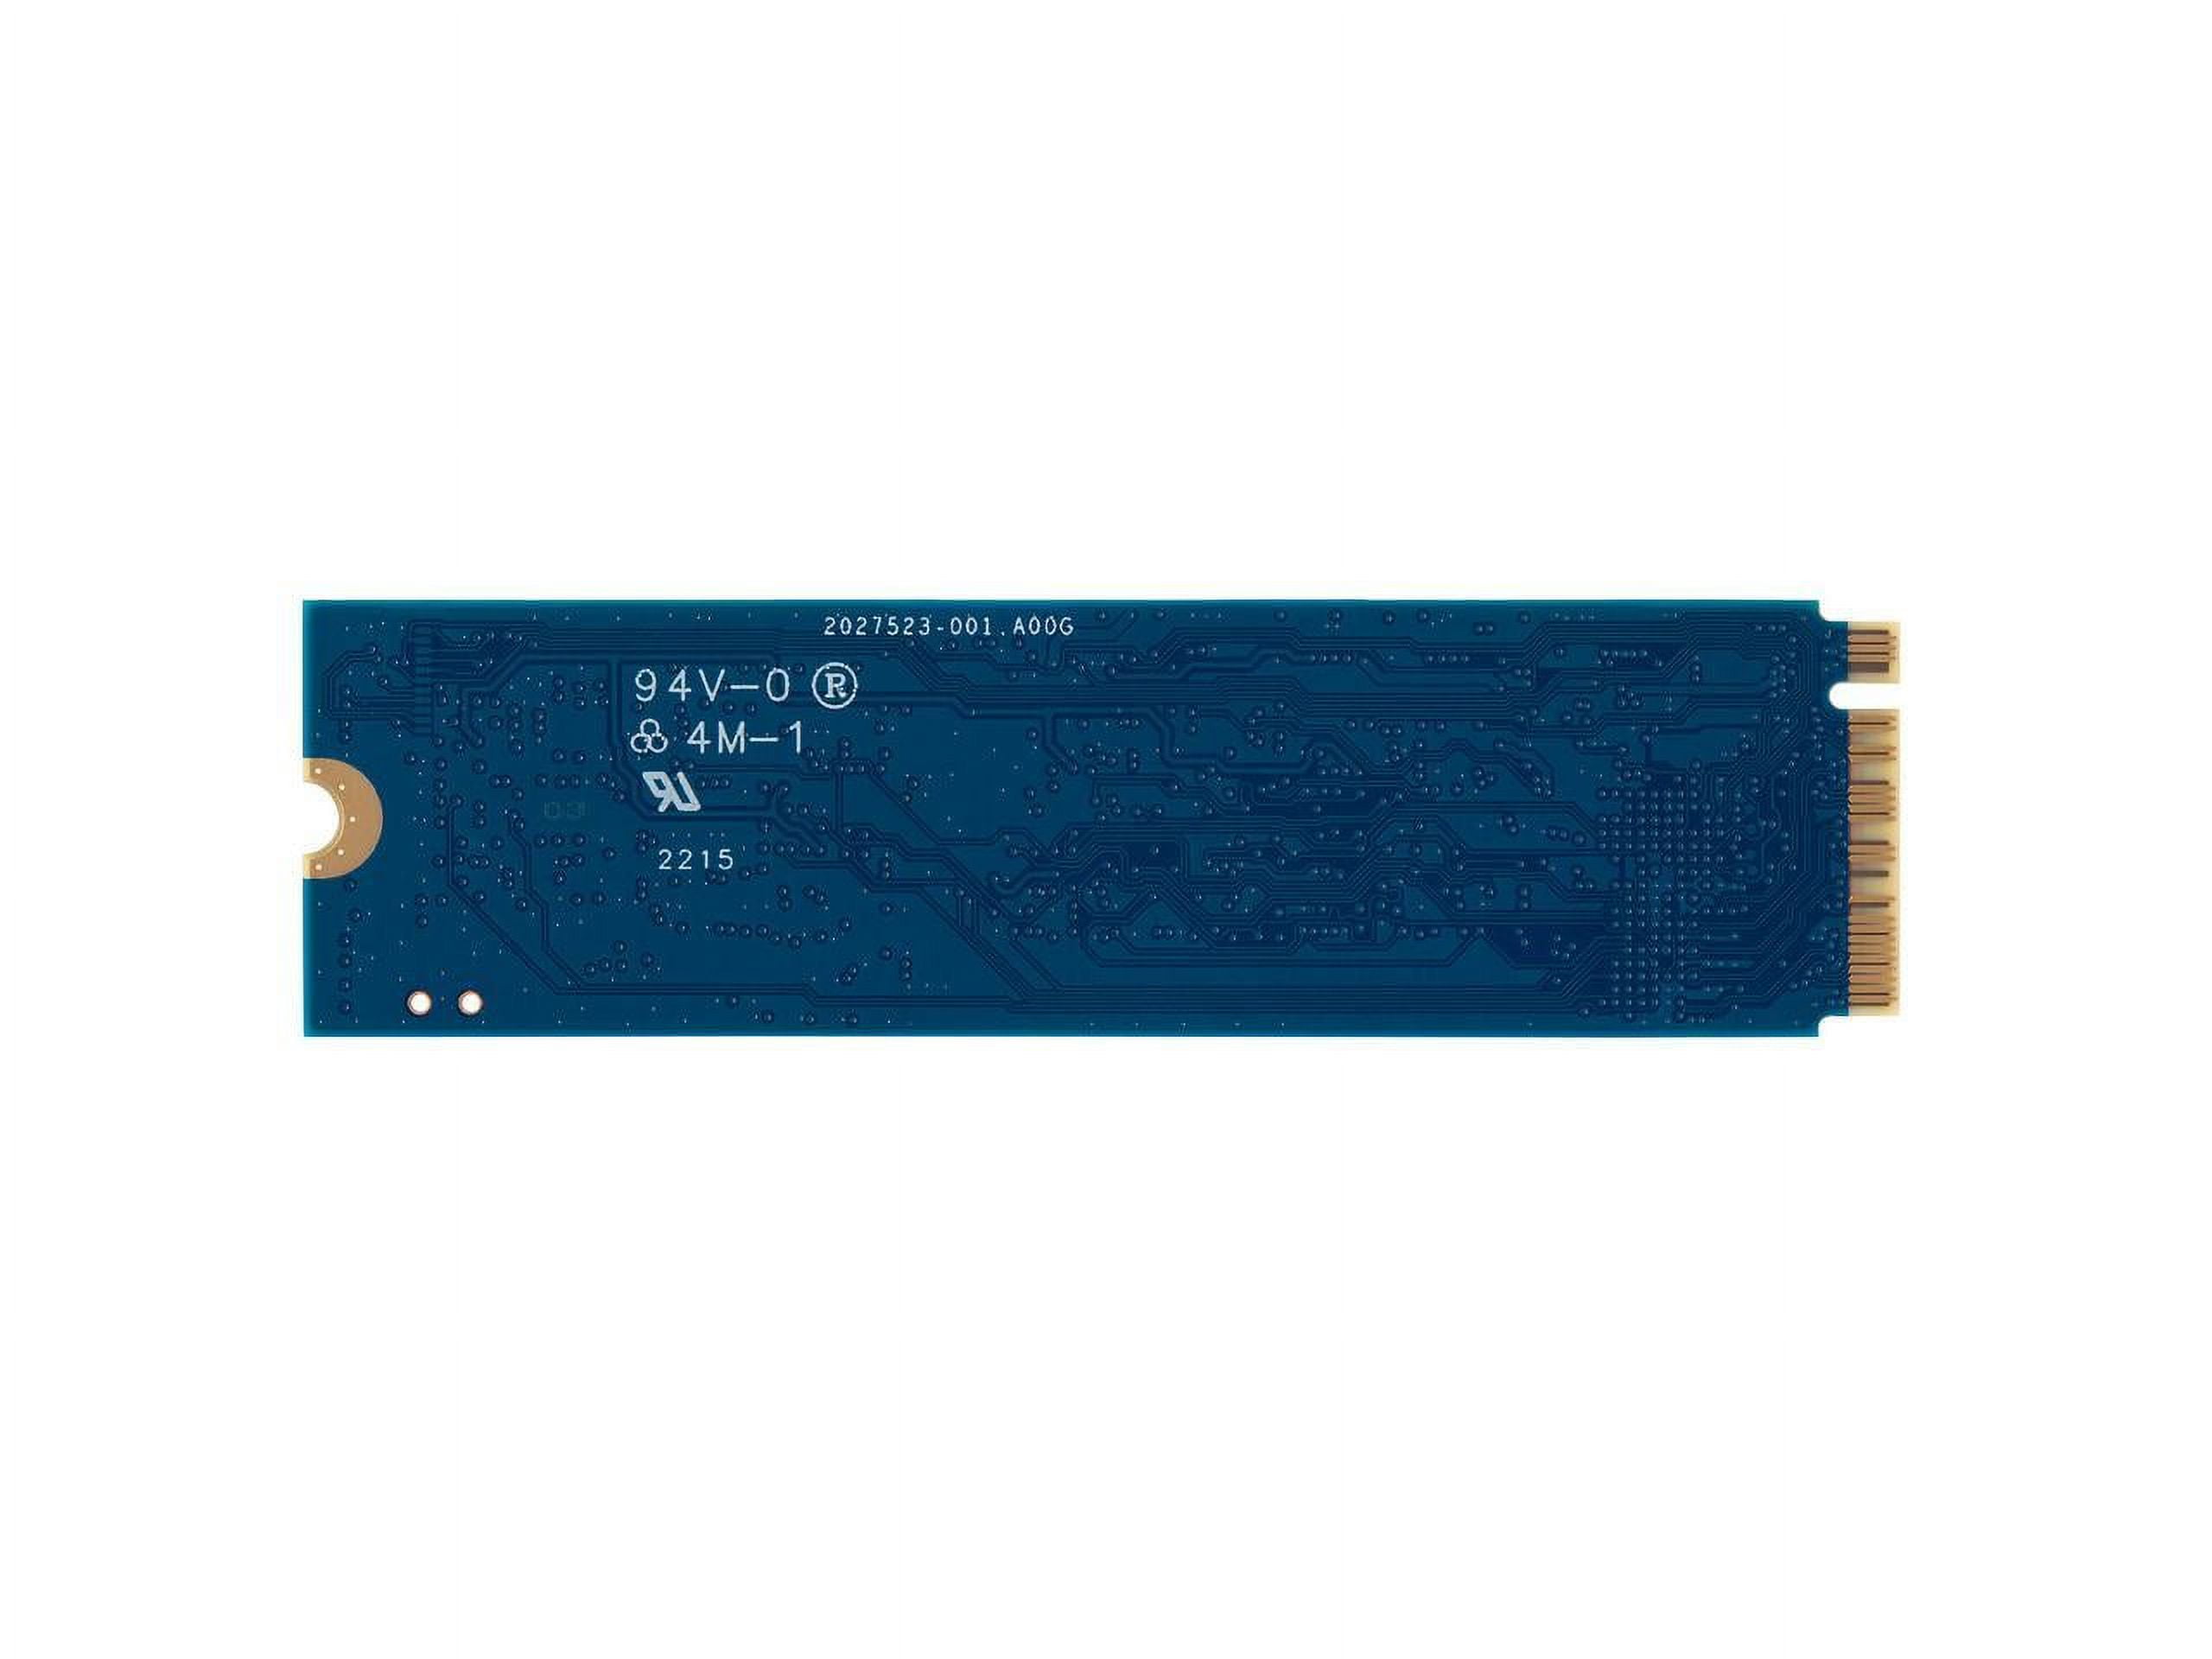 NV2 PCIe 4.0 NVMe SSD 250GB – 4TB - Kingston Technology